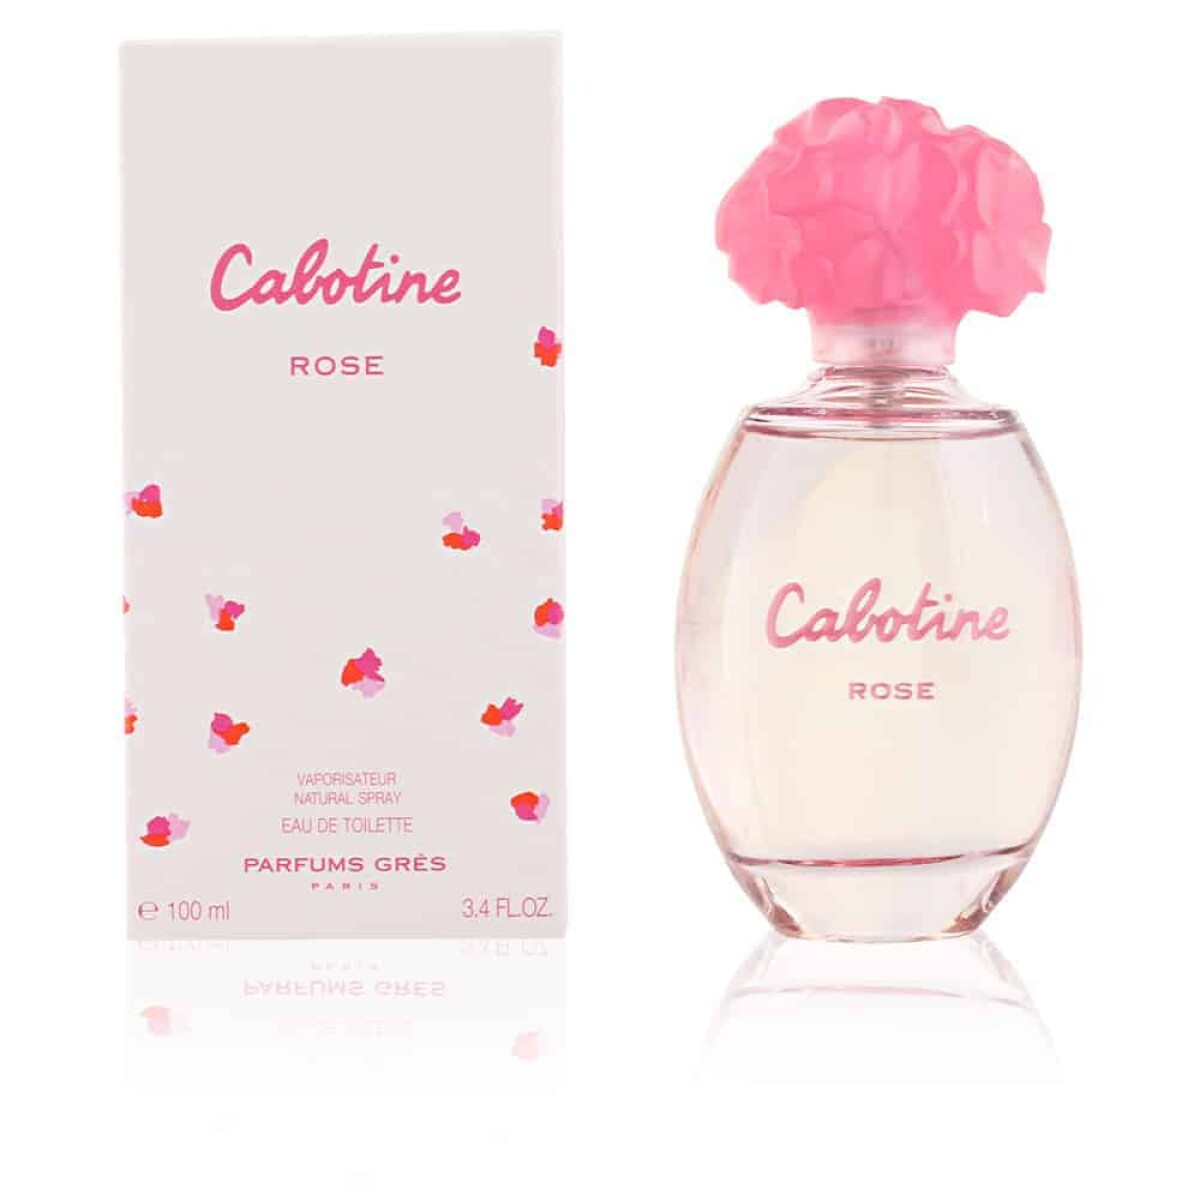 Perfume Cabotine Rose Edt 100 ml 